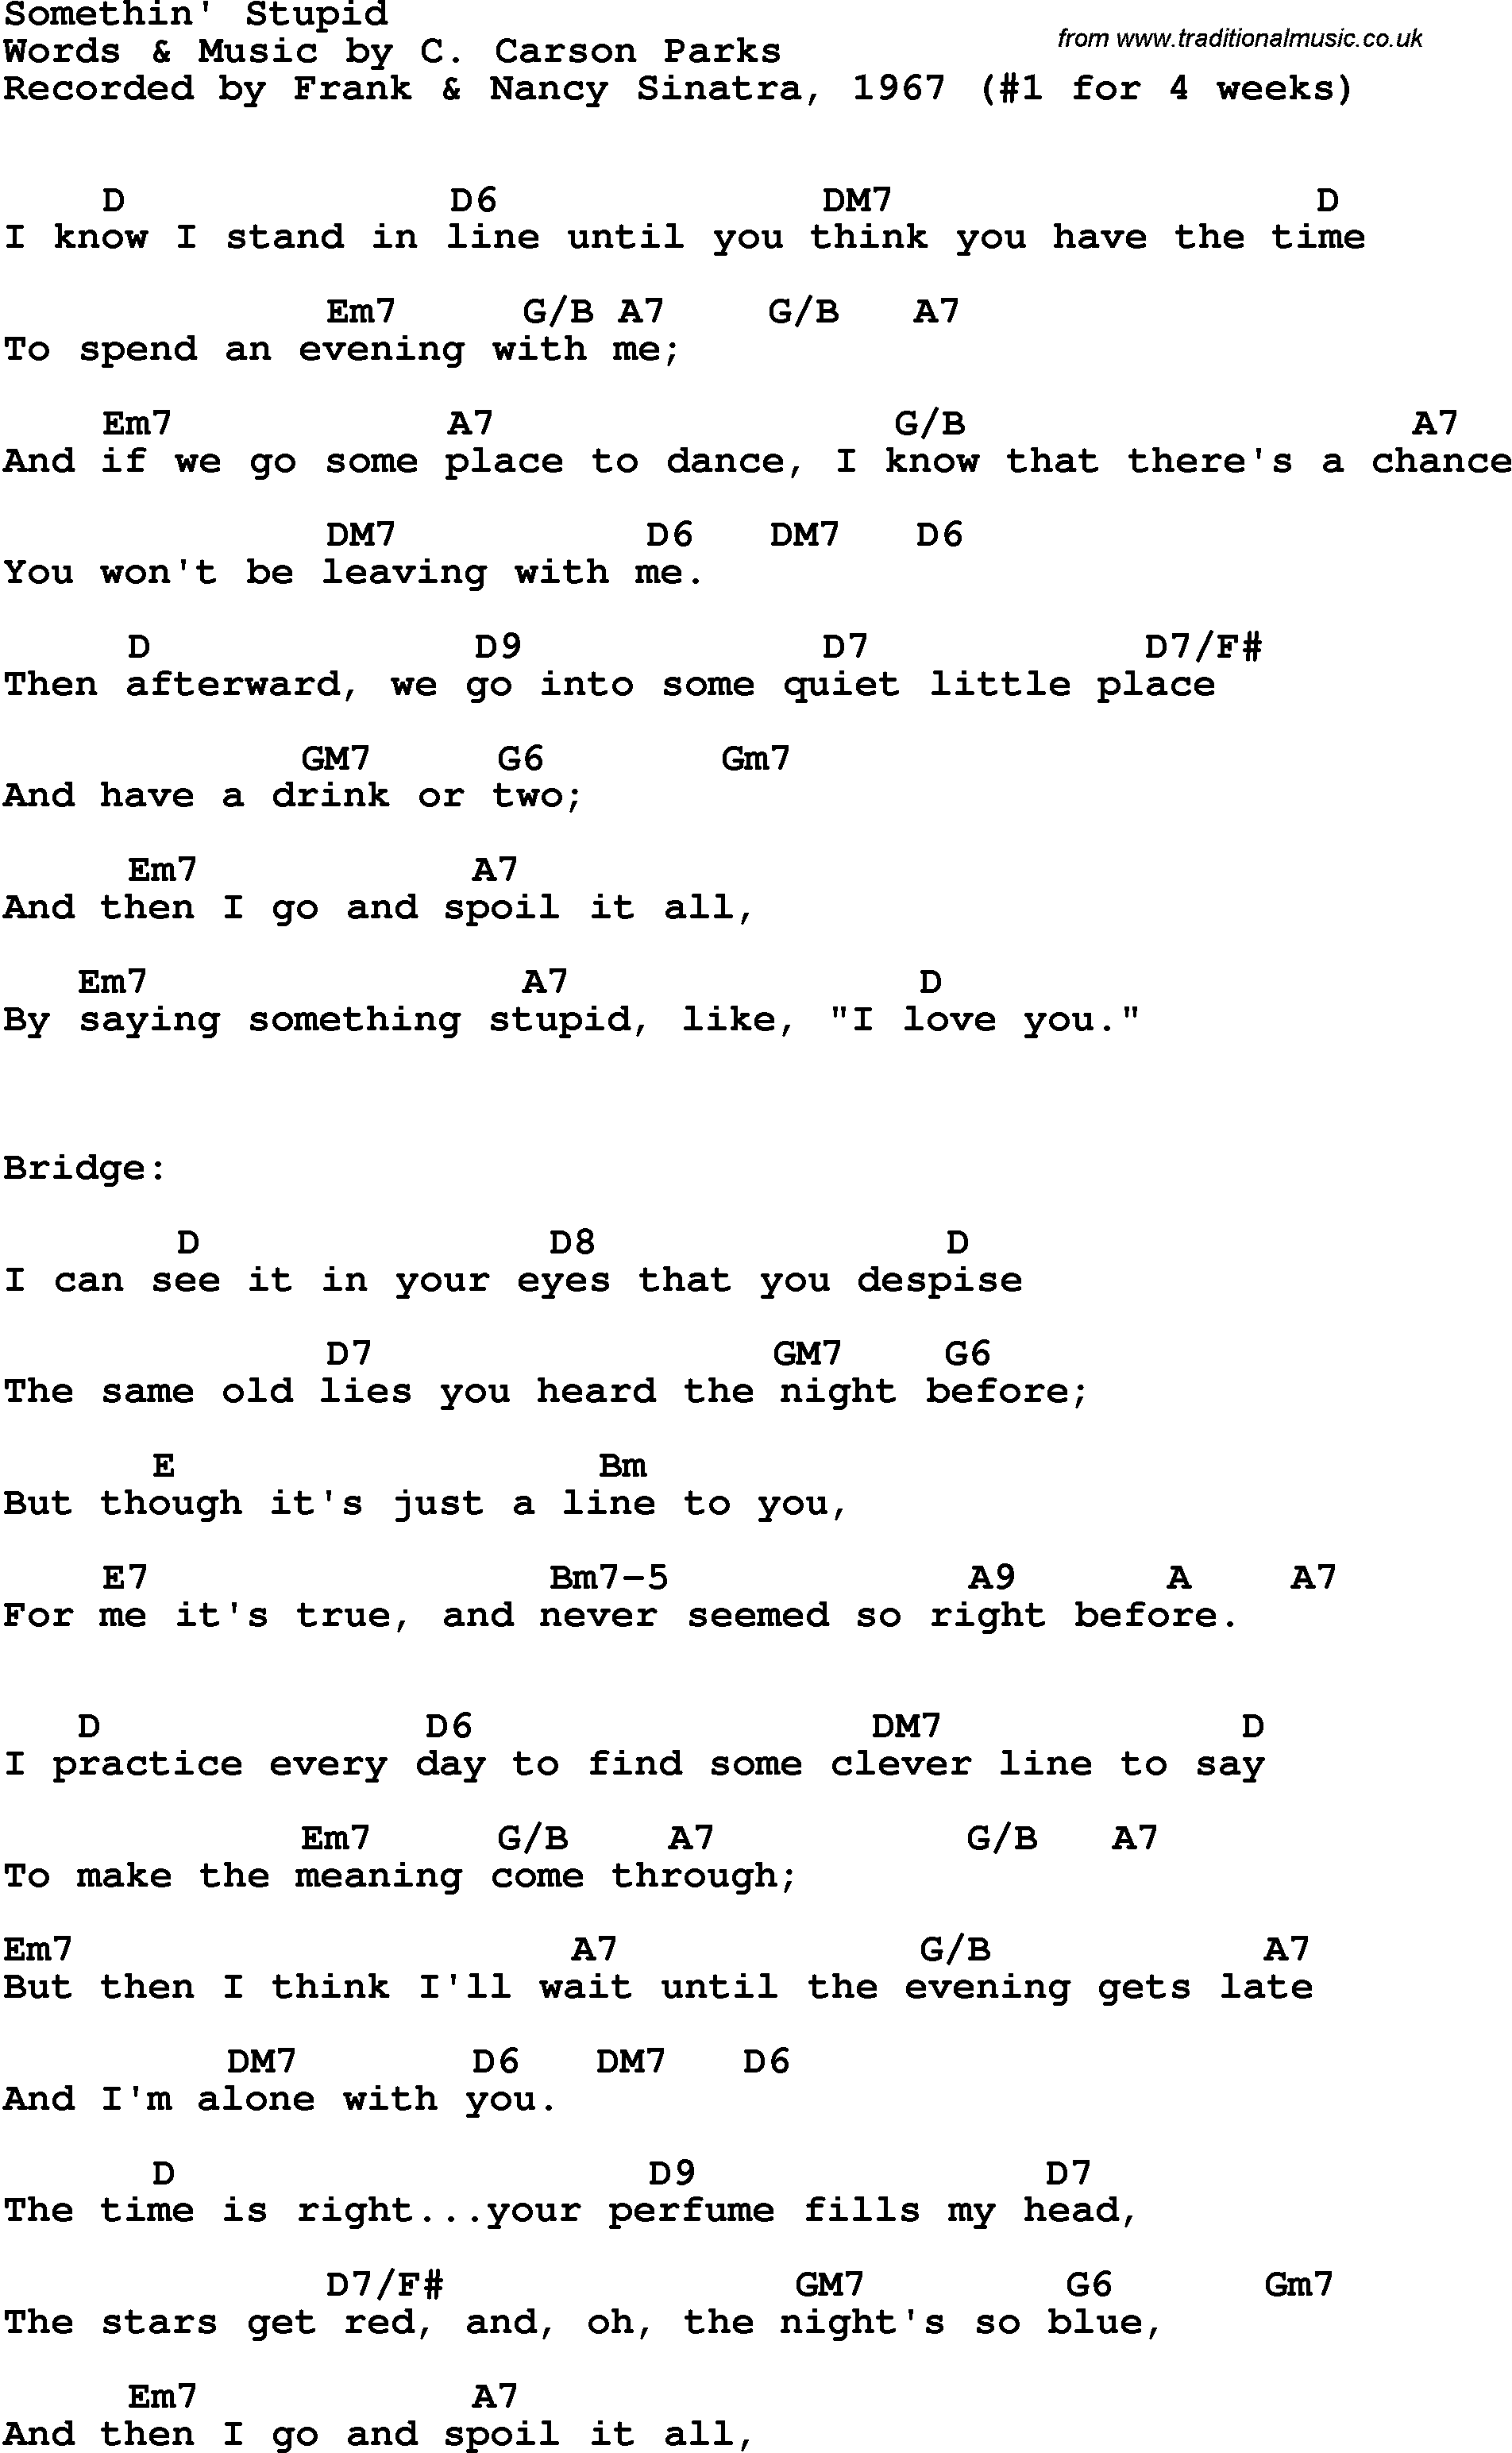 Song Lyrics with guitar chords for Somethin' Stupid - Frank & Nancy Sinatra, 1967